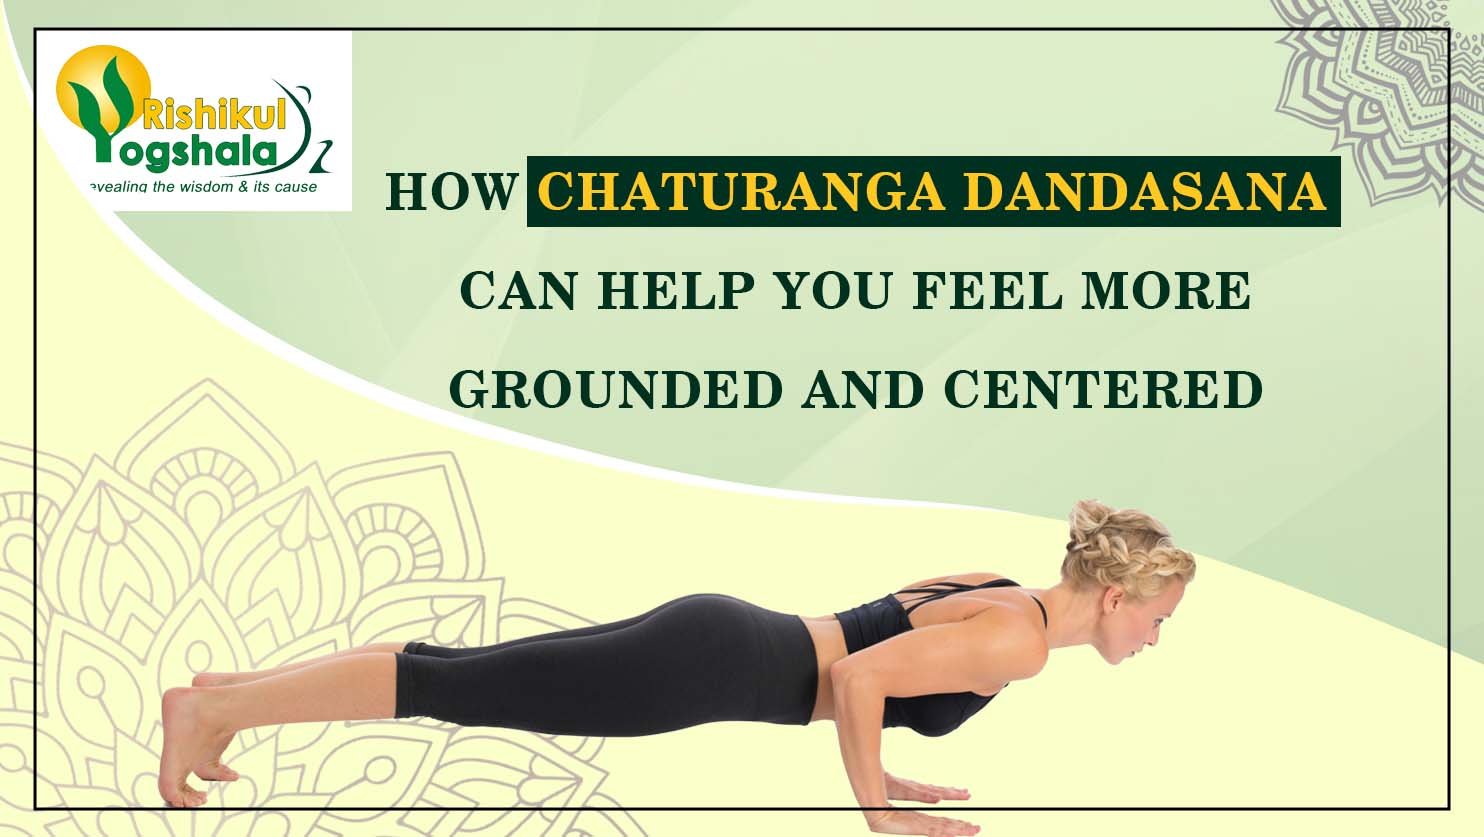 BENEFITS OF CHATURANGA FOUR LIMBED STAFF - Vinyasa Yoga Academy